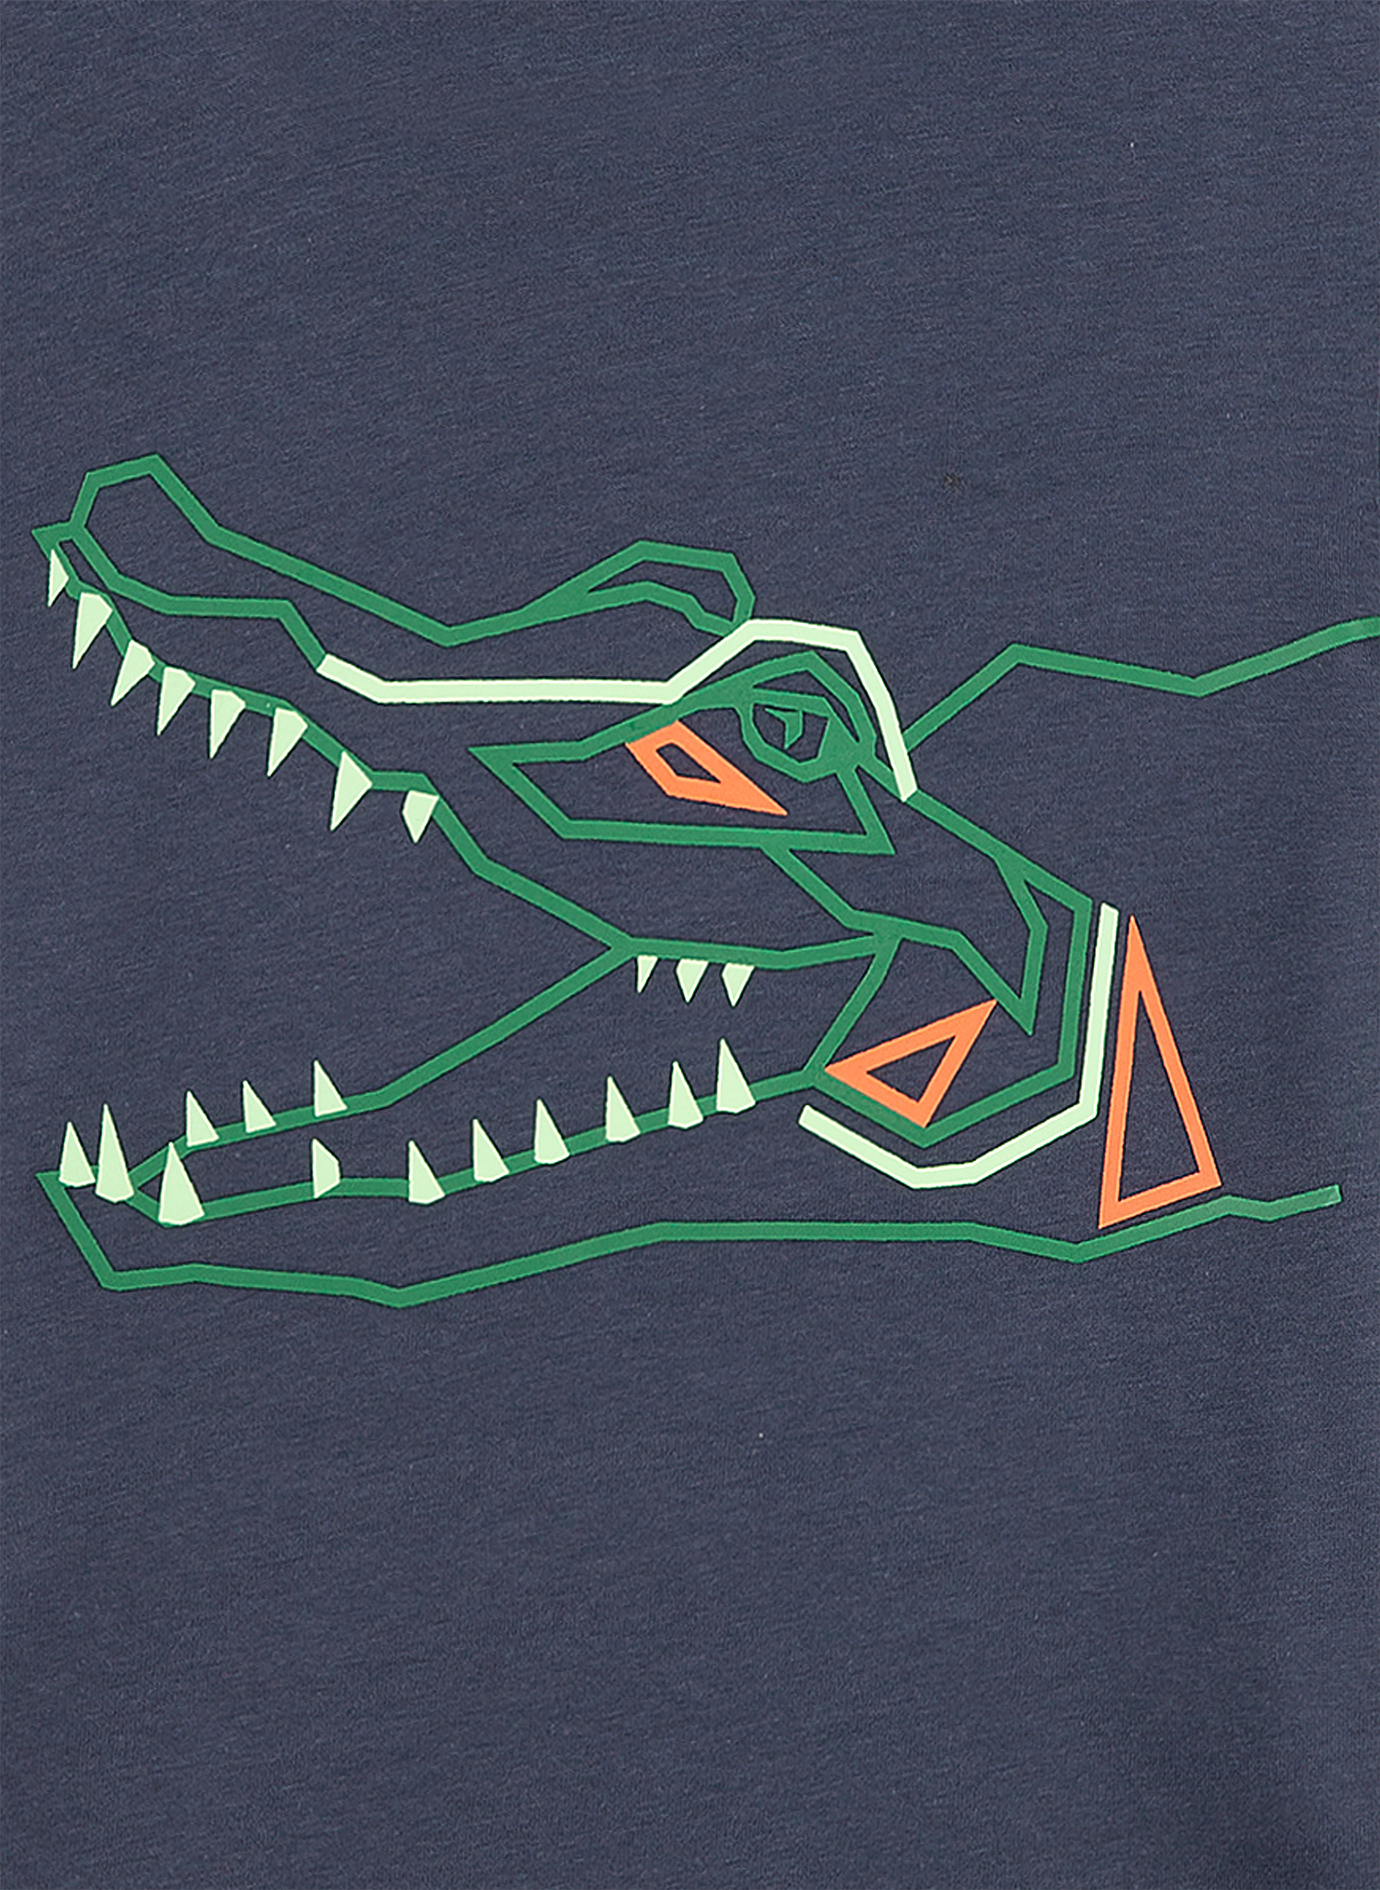 Jungen T-Shirt Dunkelblau Crocodile